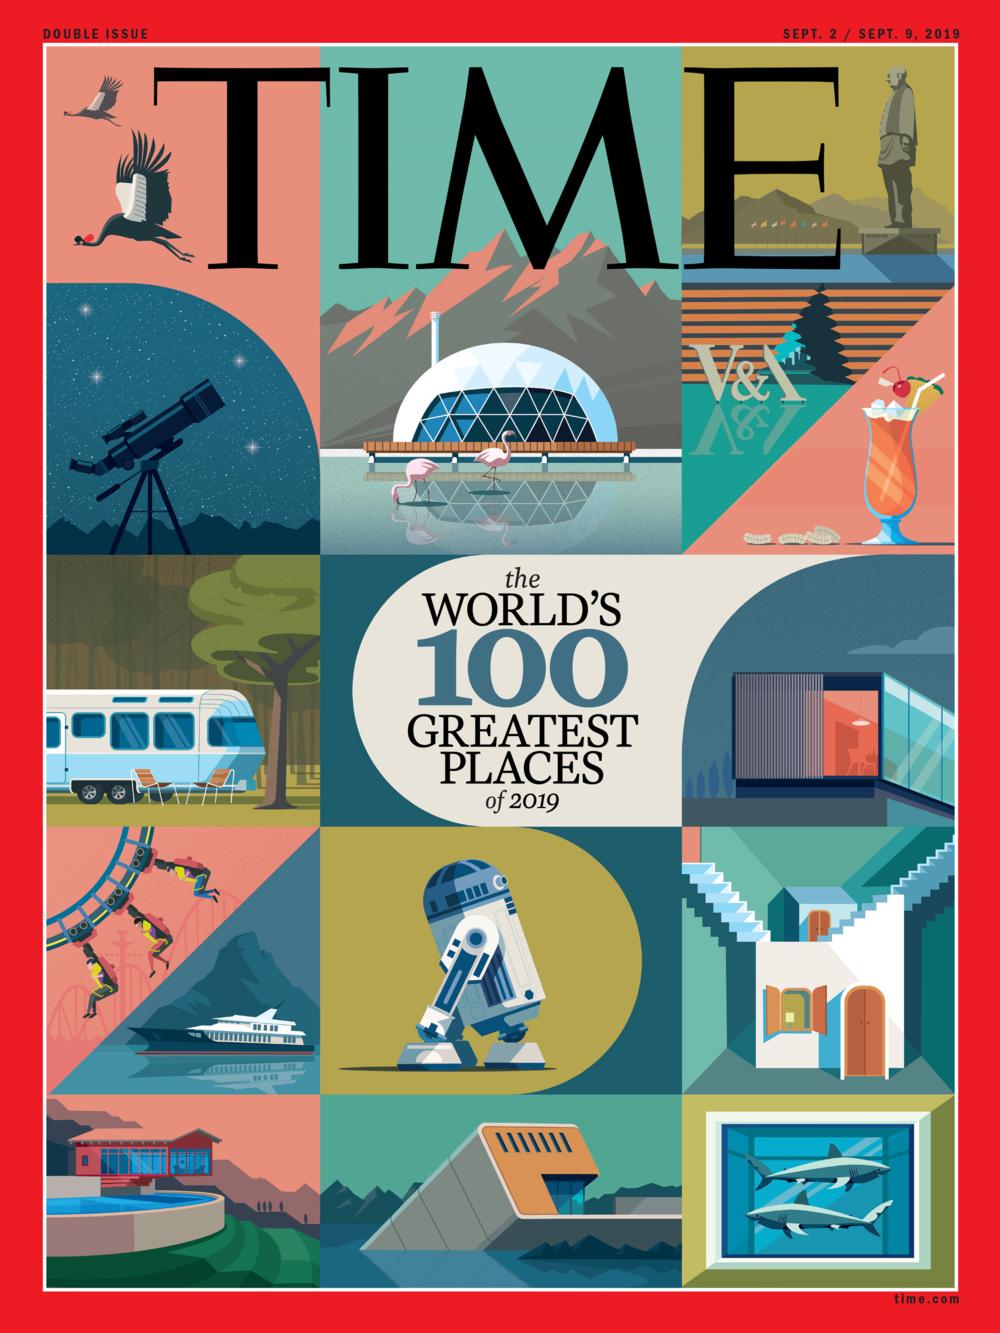 NCC Named on Time Magazine's List of World Greatest Places Chautauqua